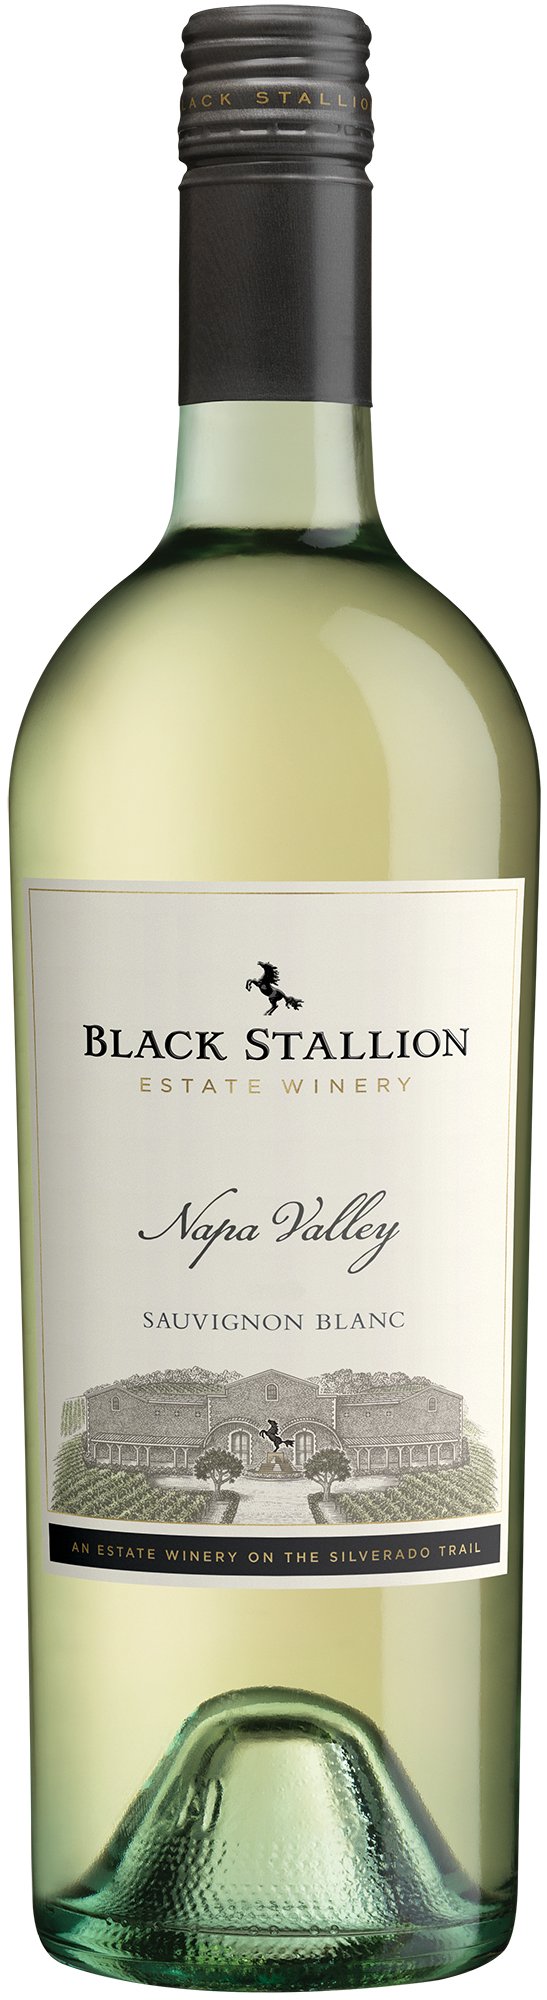 images/wine/WHITE WINE/Black Stallion Sauvignon Blanc.jpg